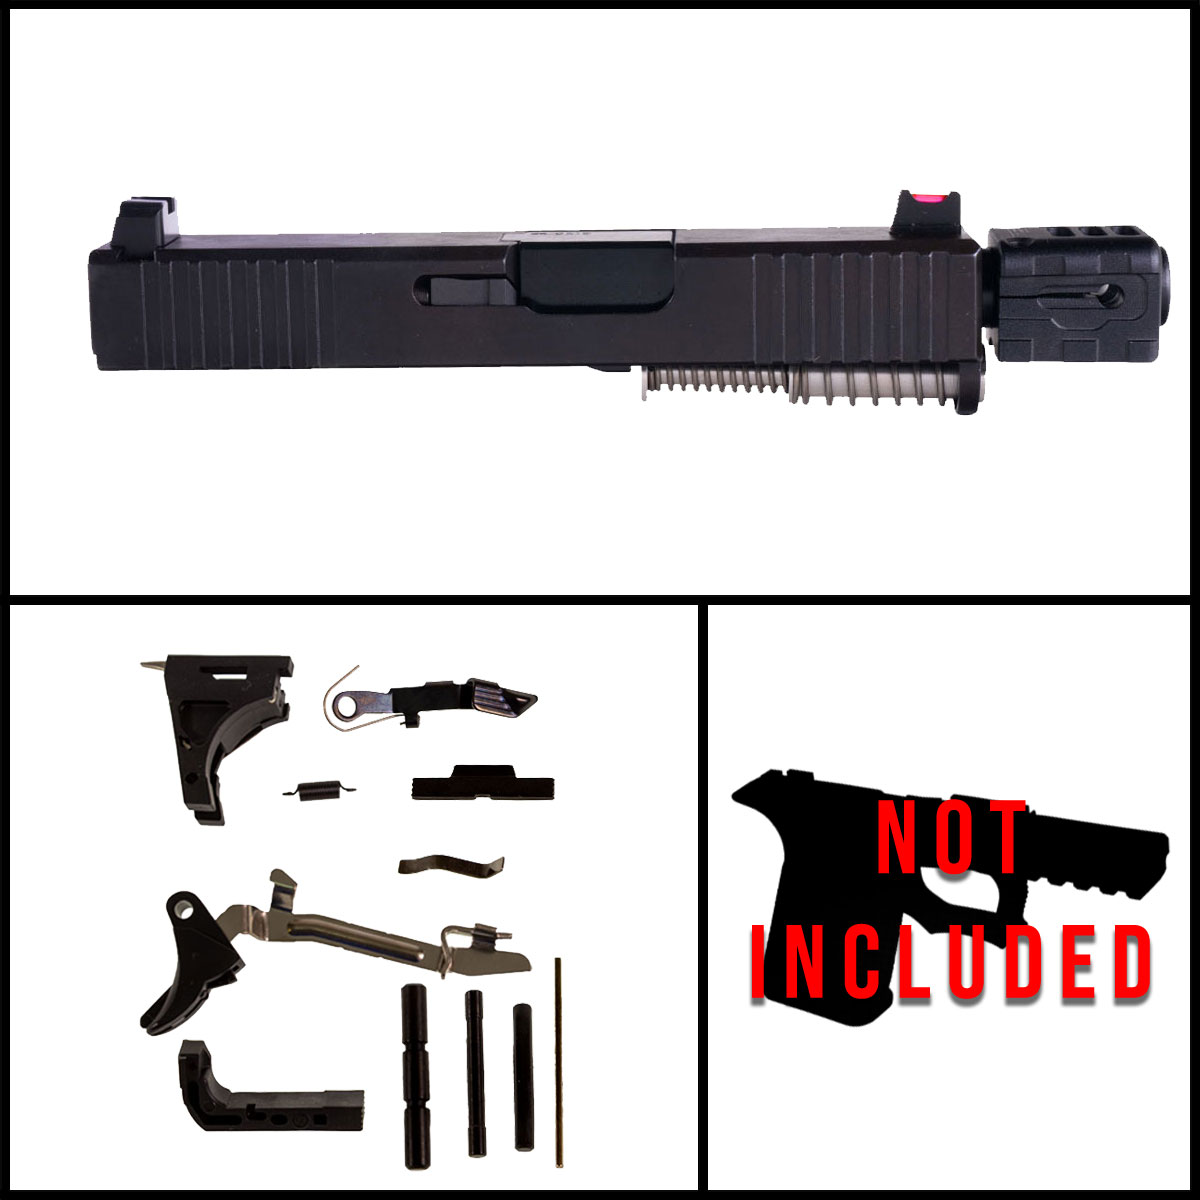 MMC 'Twenty-six w/ Strike Industries Compensator' 9mm Full Pistol Build Kit (Everything Minus Frame) - Glock 26 Gen 1-2 Compatible